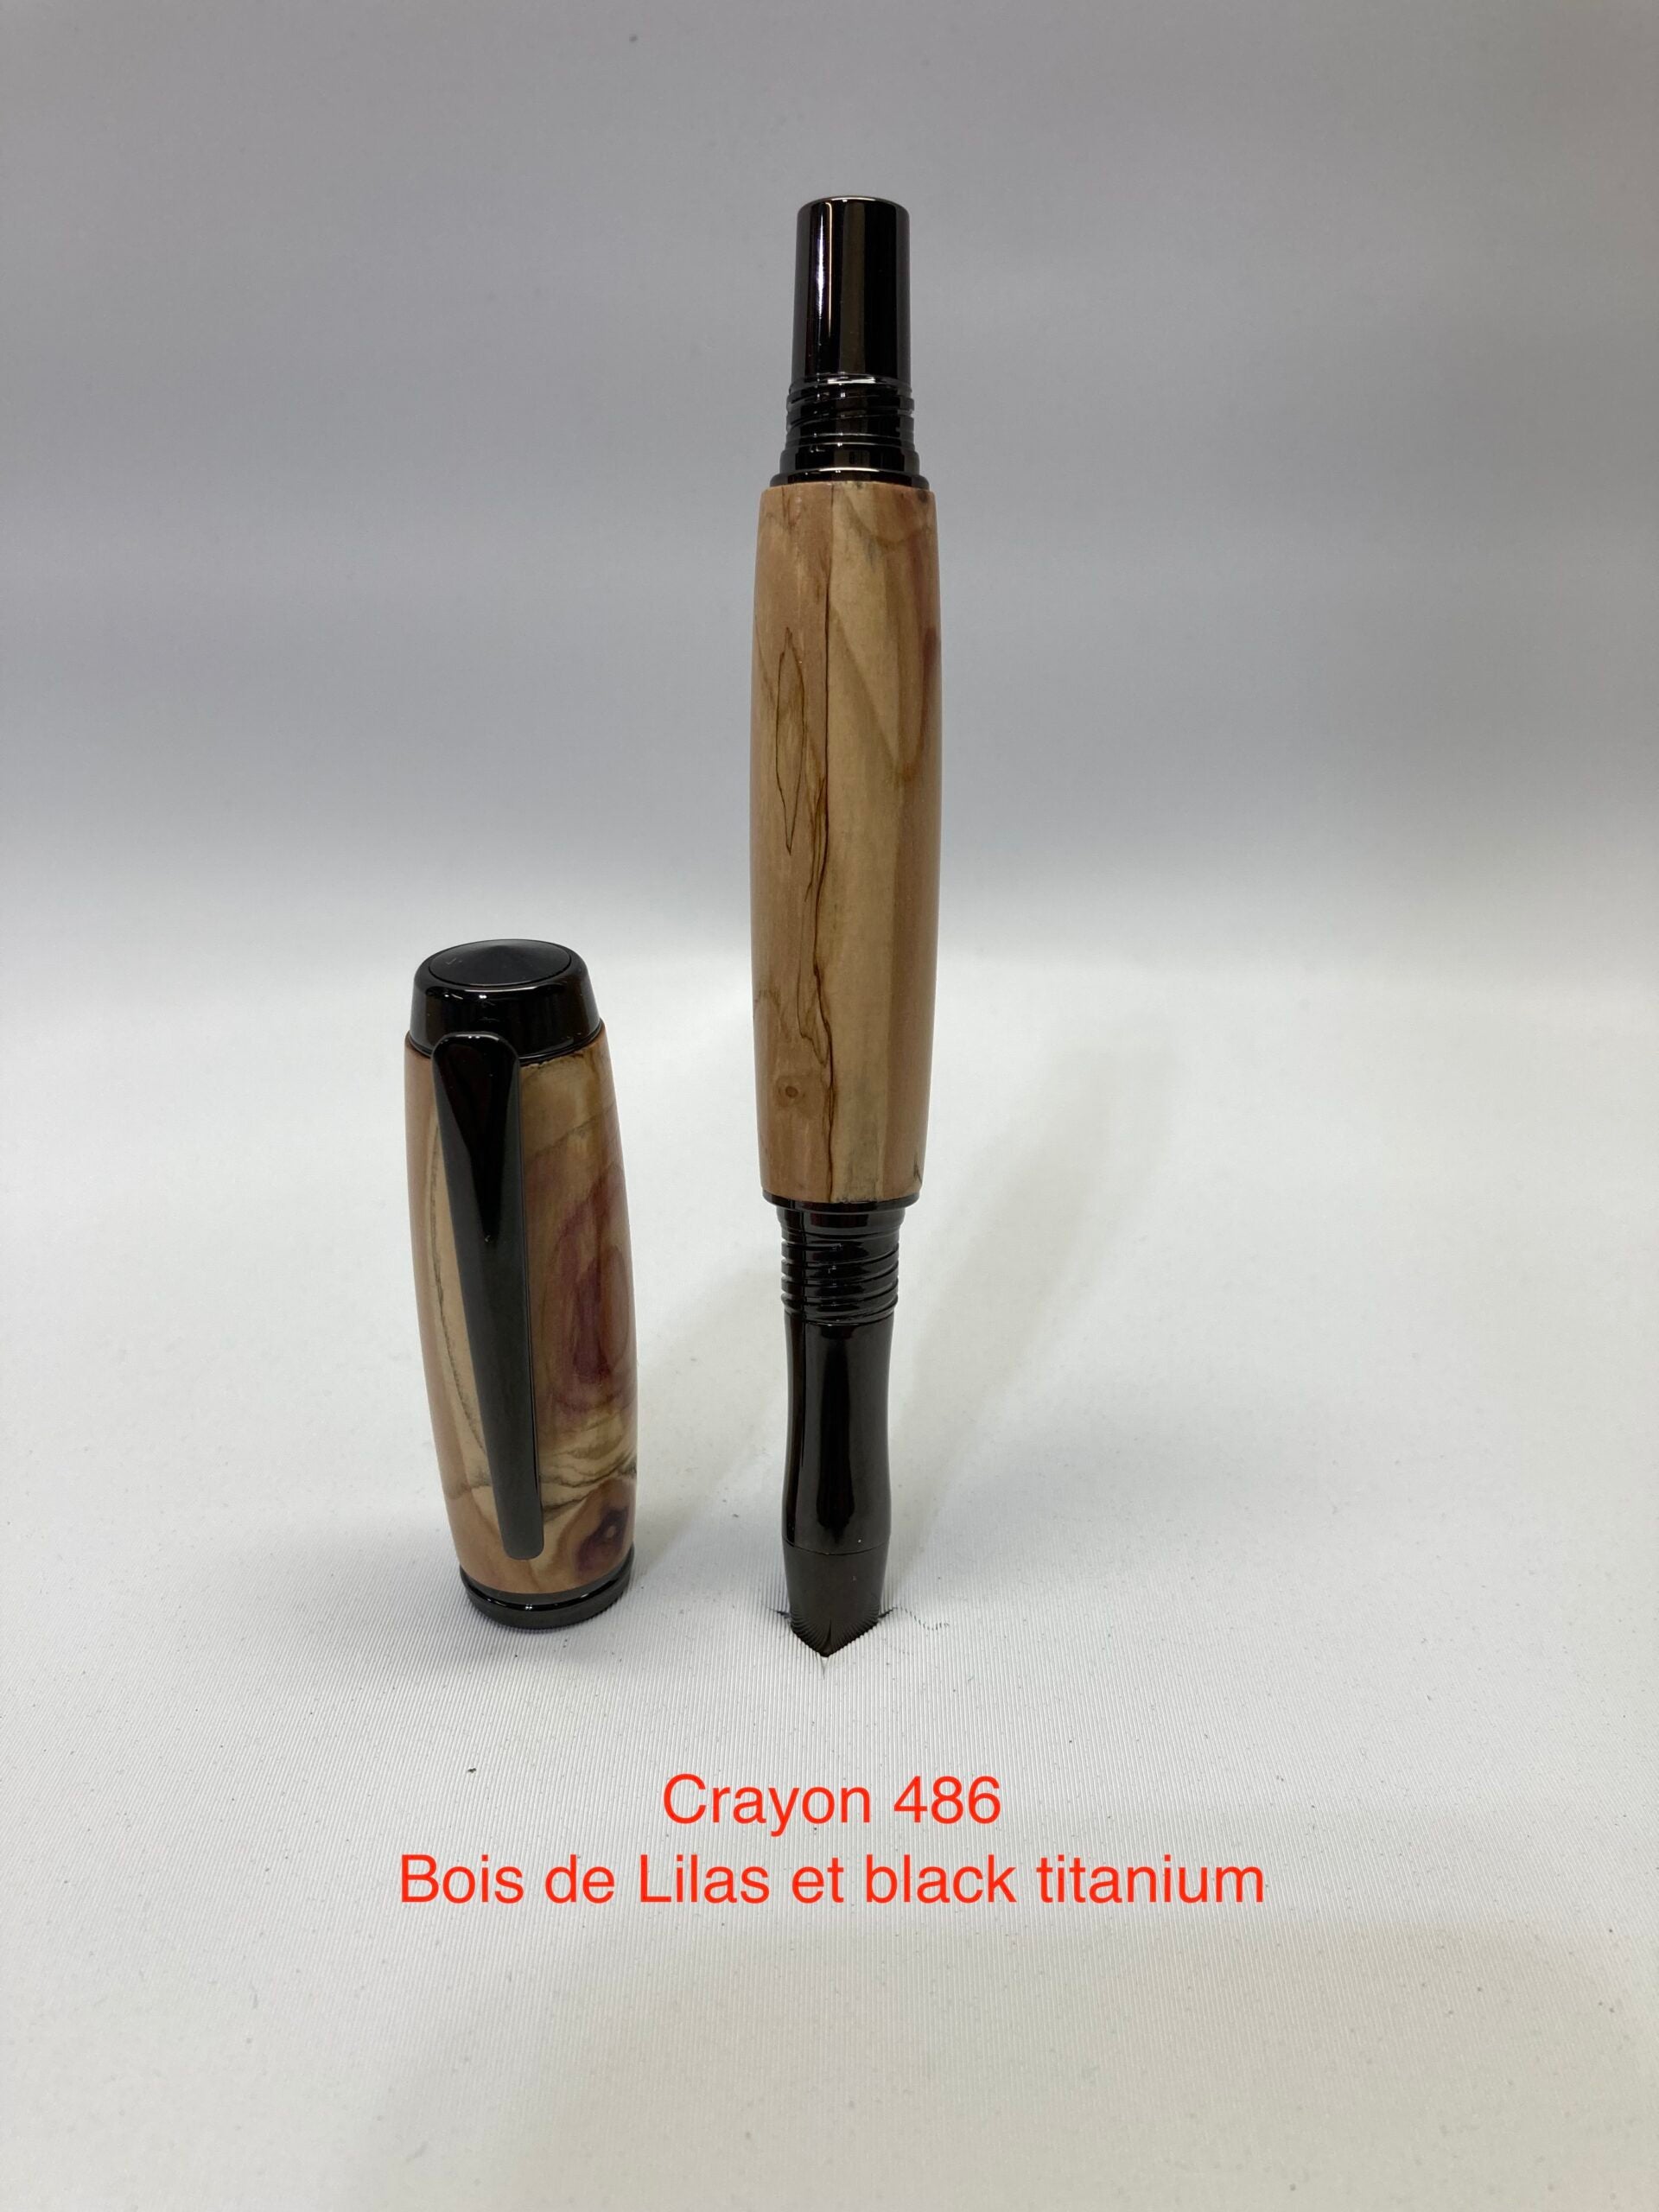 Algonquin, lilac wood and black titanium